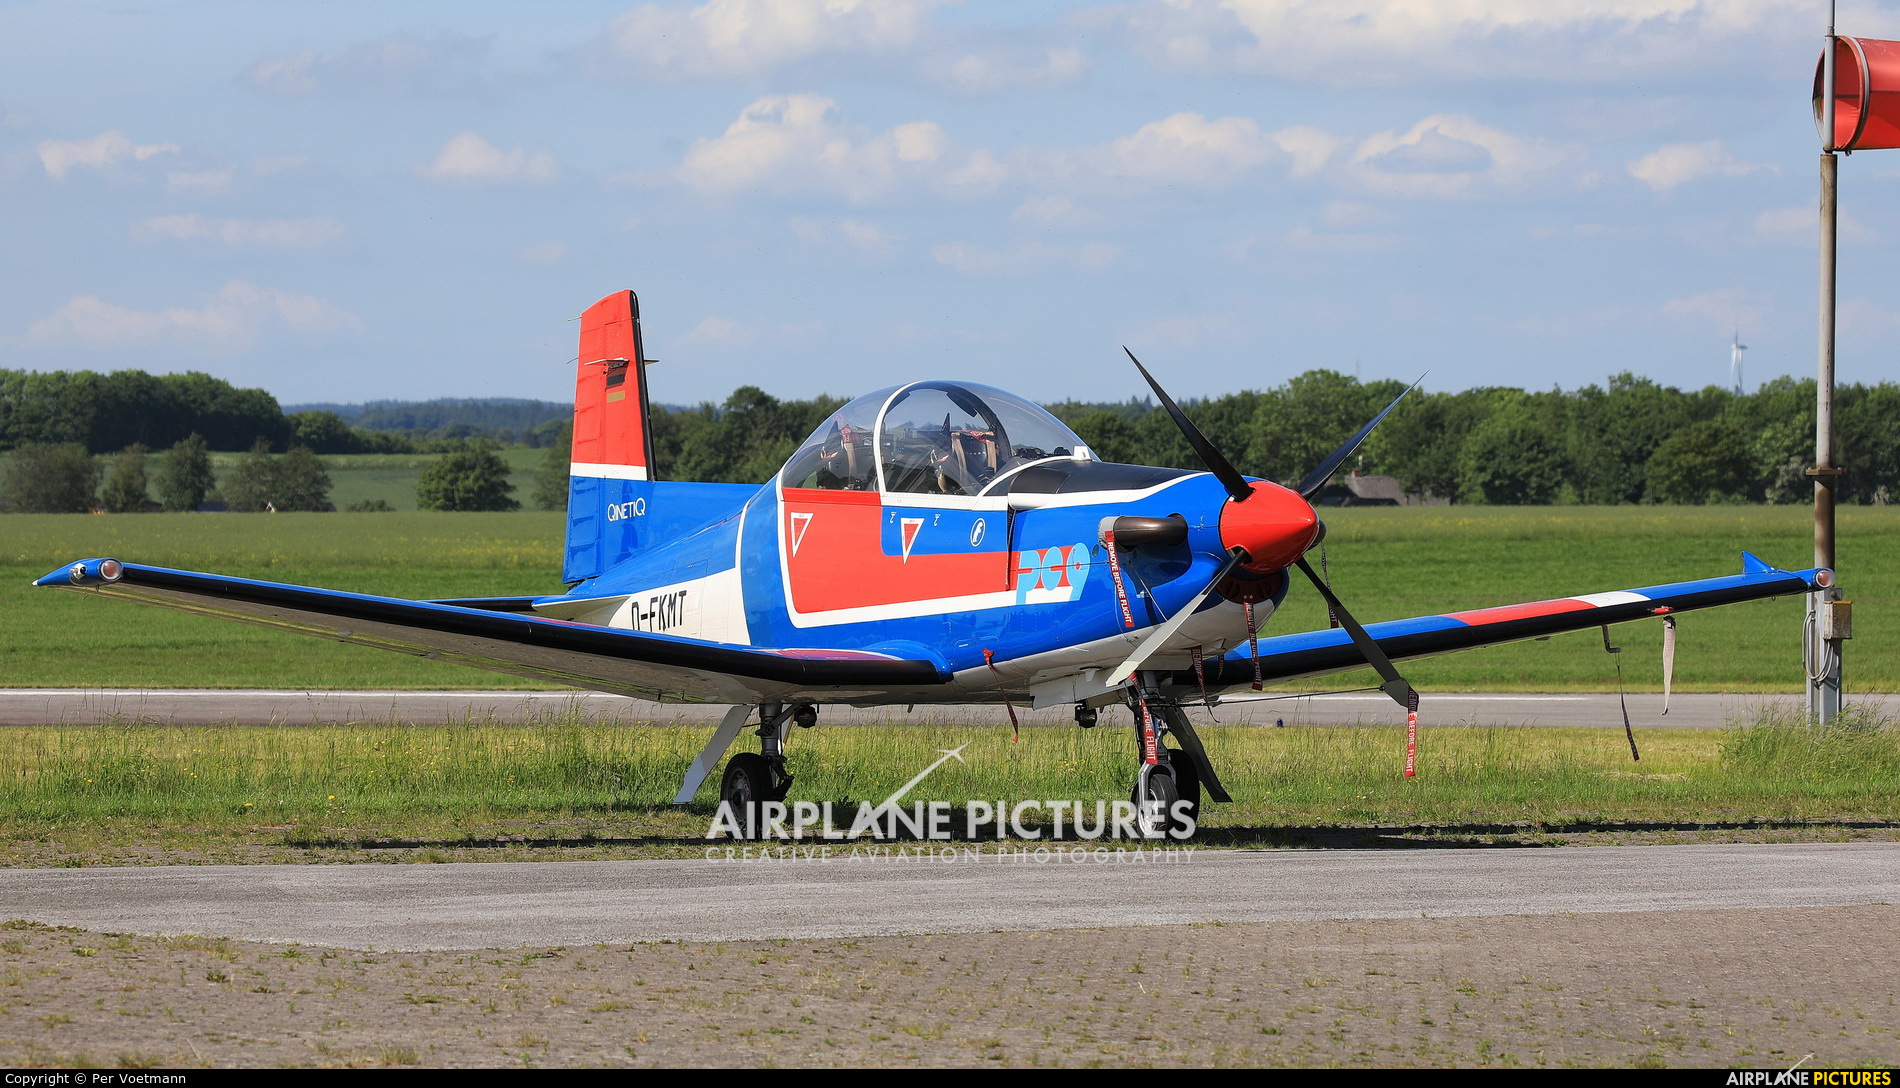 QinetiQ D-FKMT aircraft at Randers Flyveplads